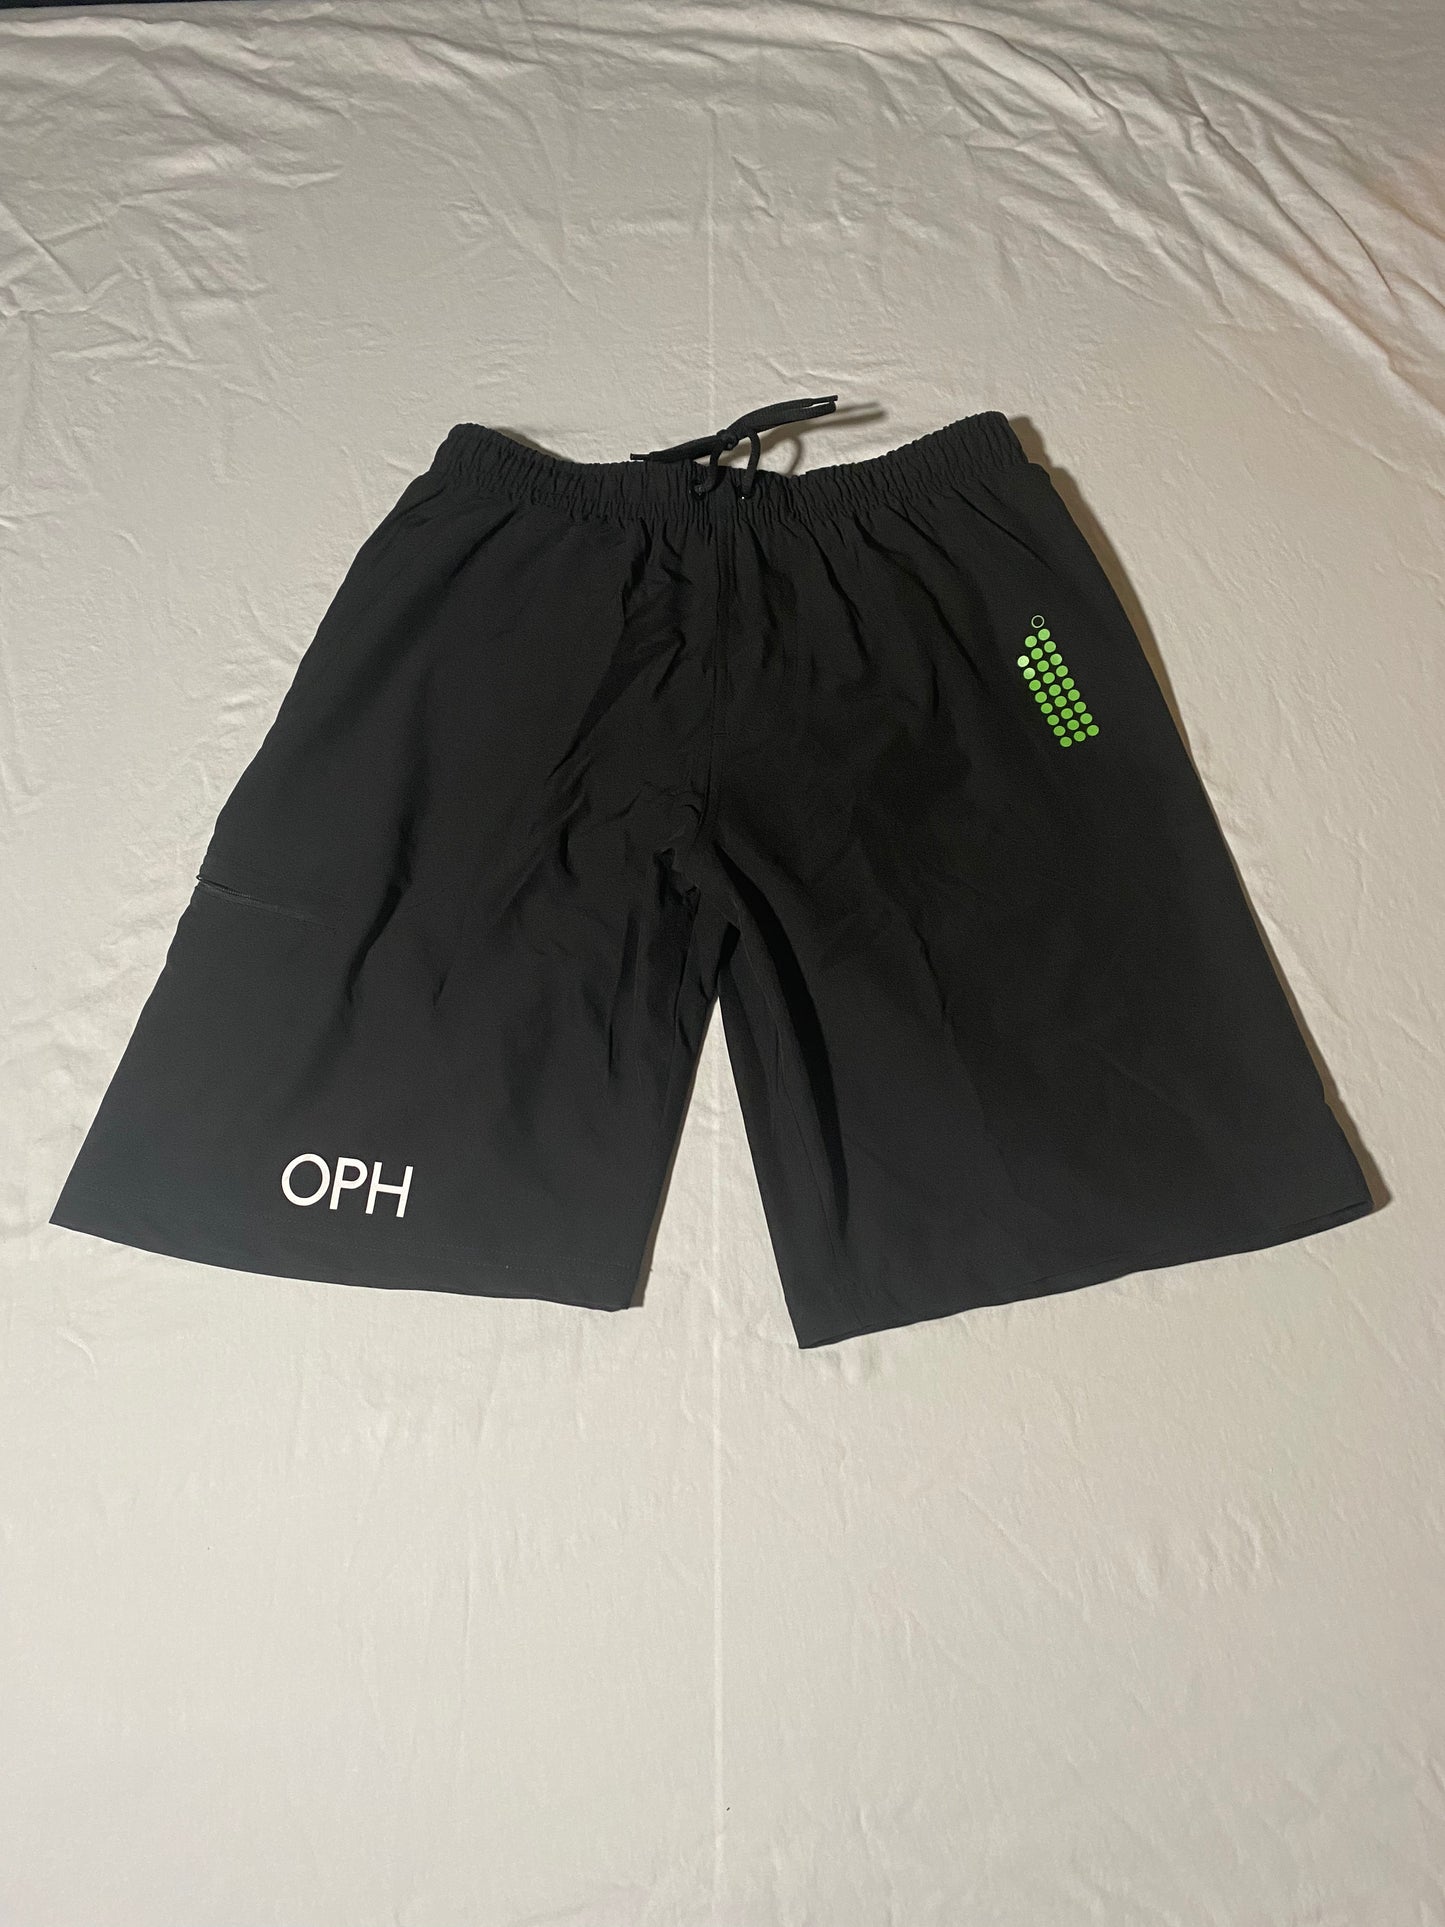 OPH Swim Trunk Shorts